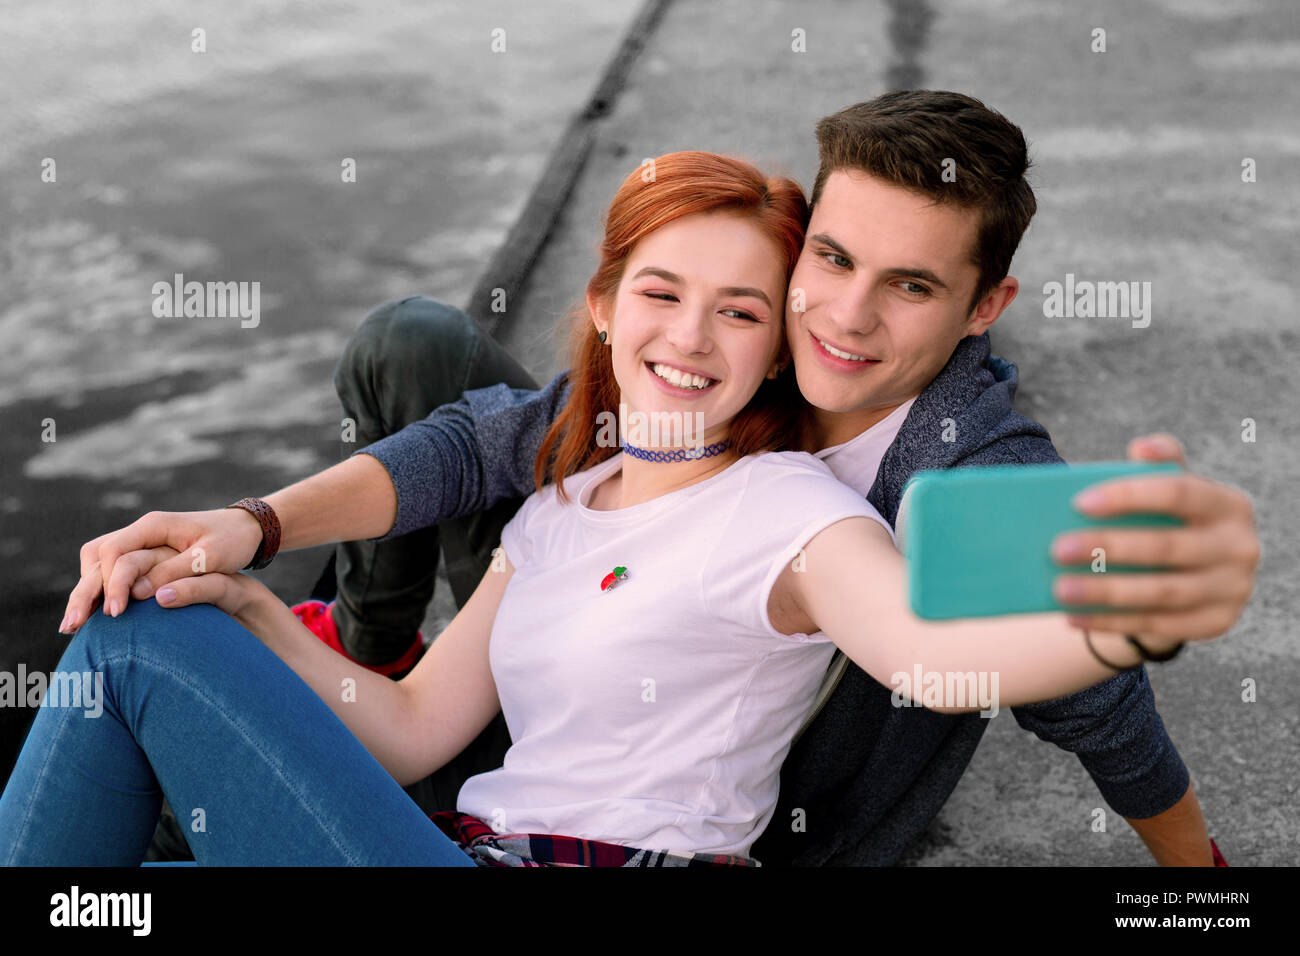 Pinterest | Relationship goals pictures, Cute relationship photos, Cute  couple selfies